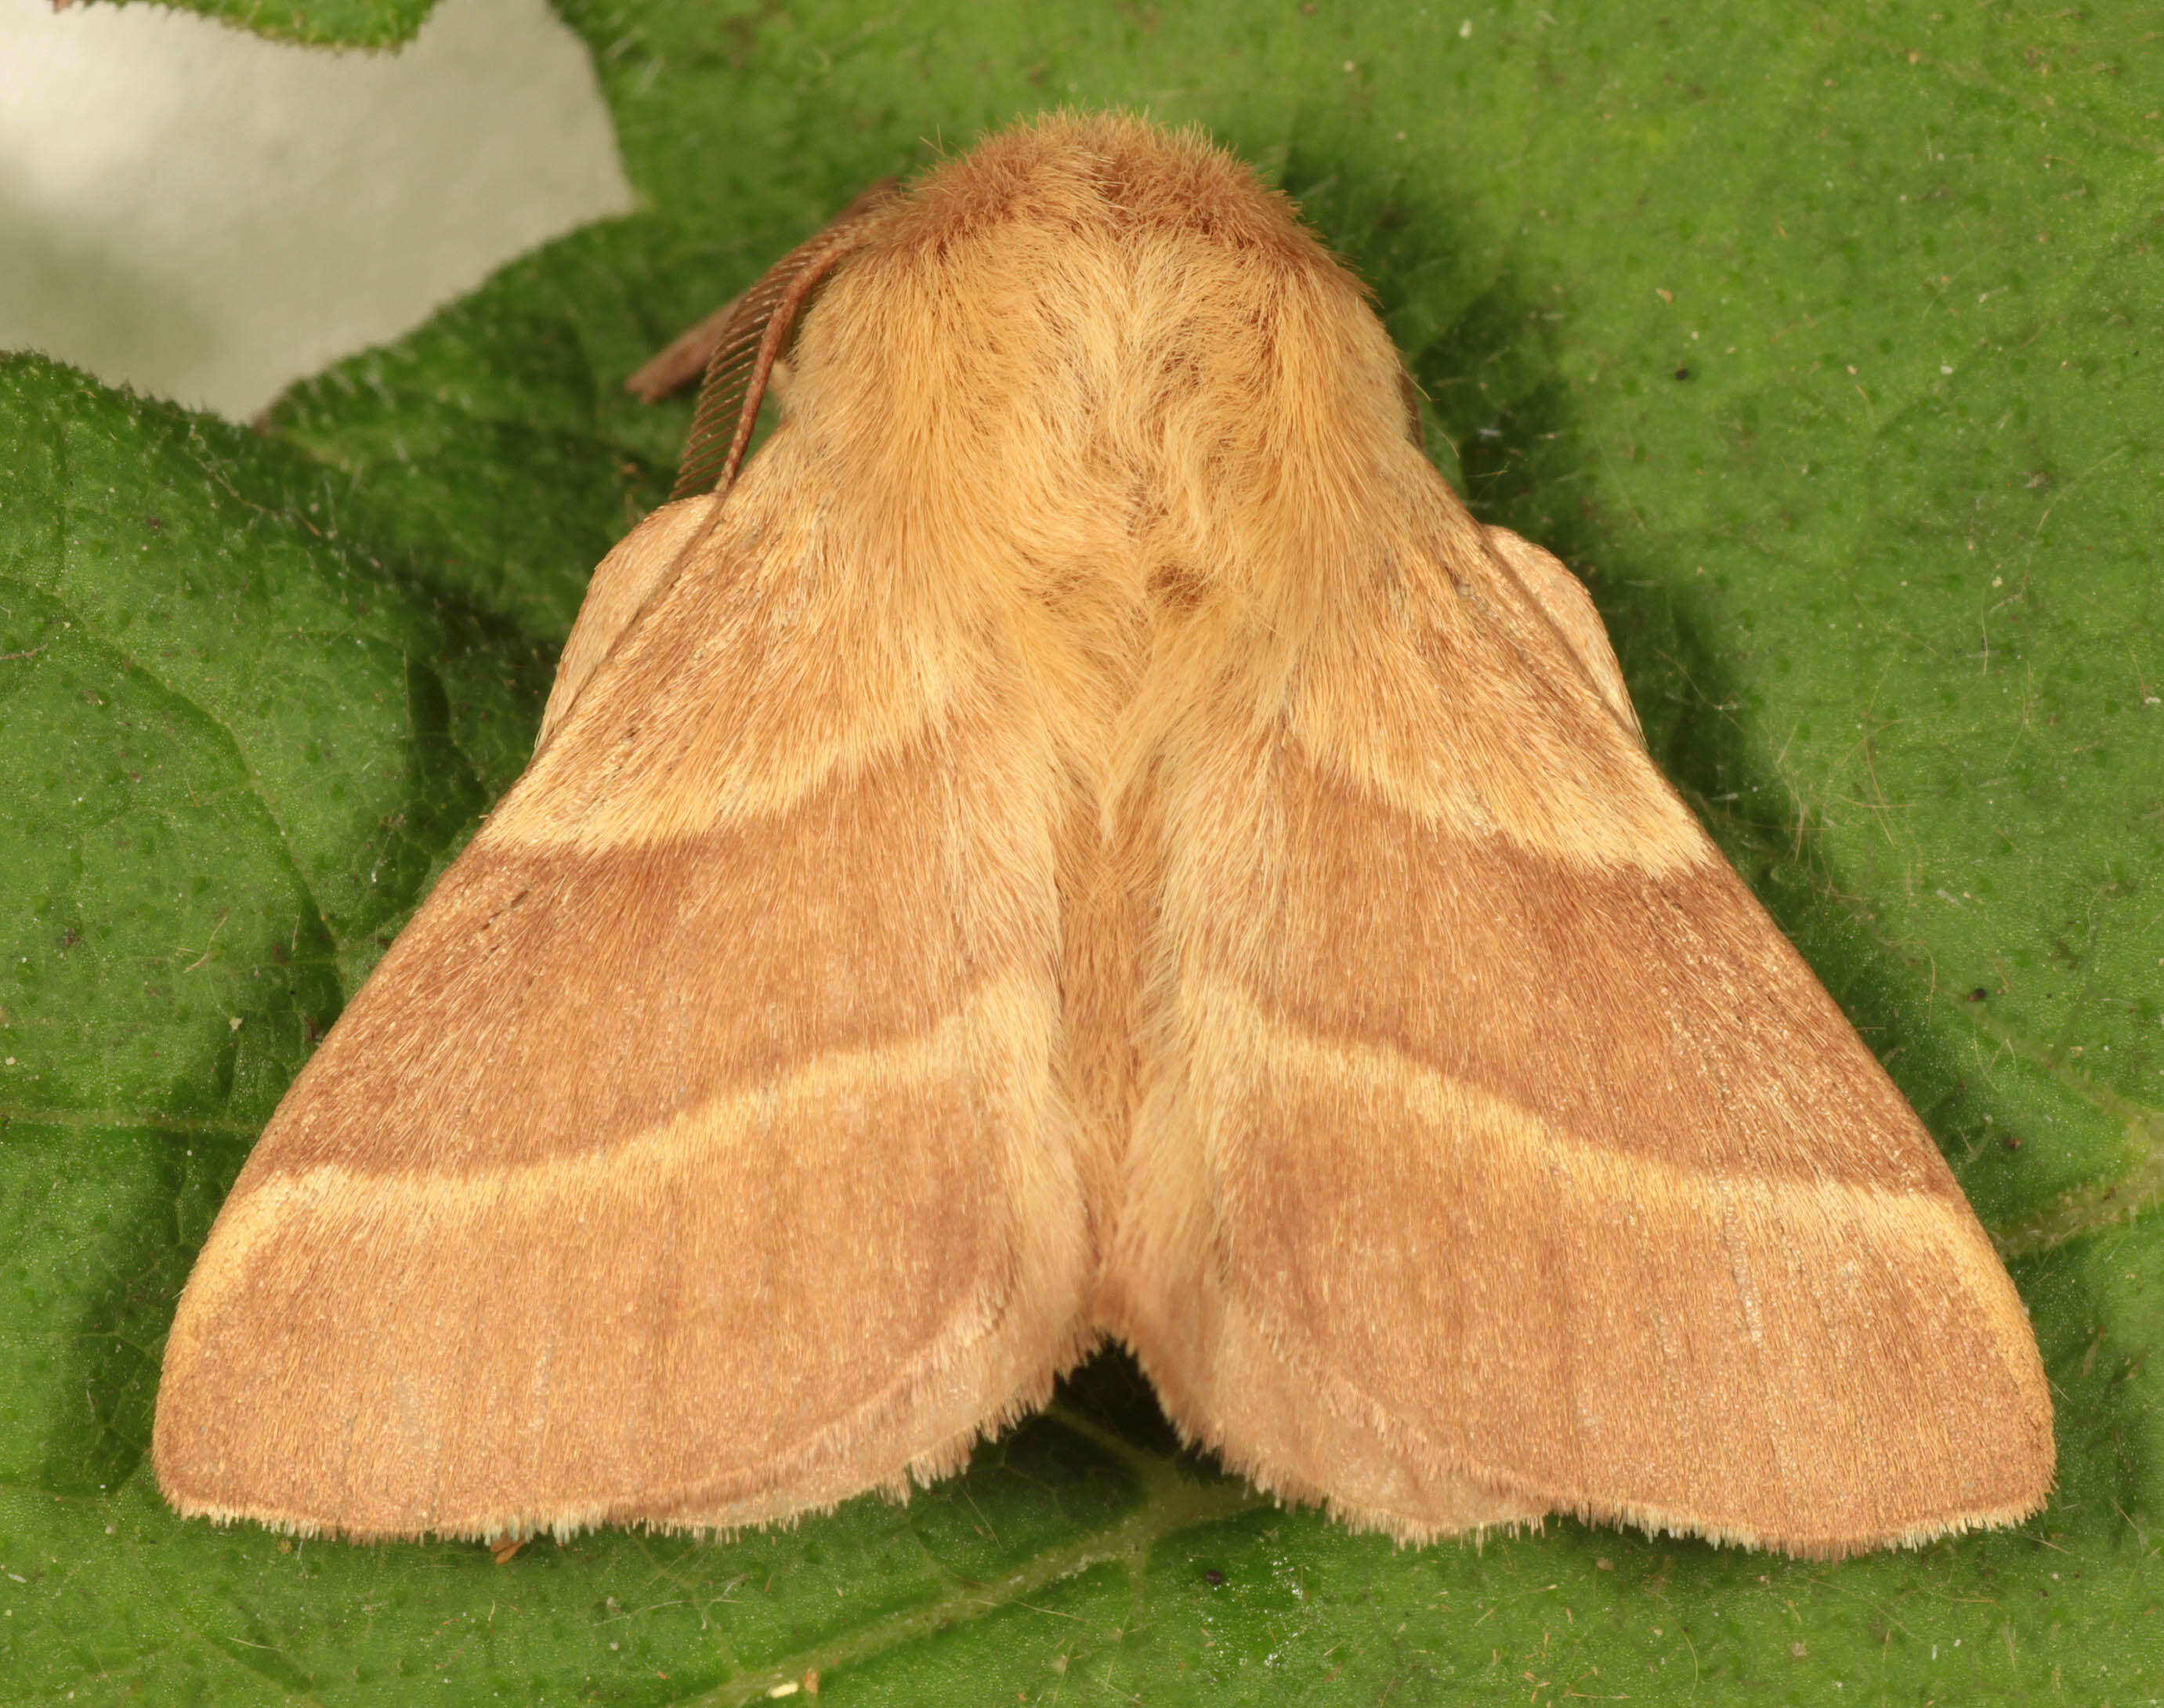 Image of lackey moth